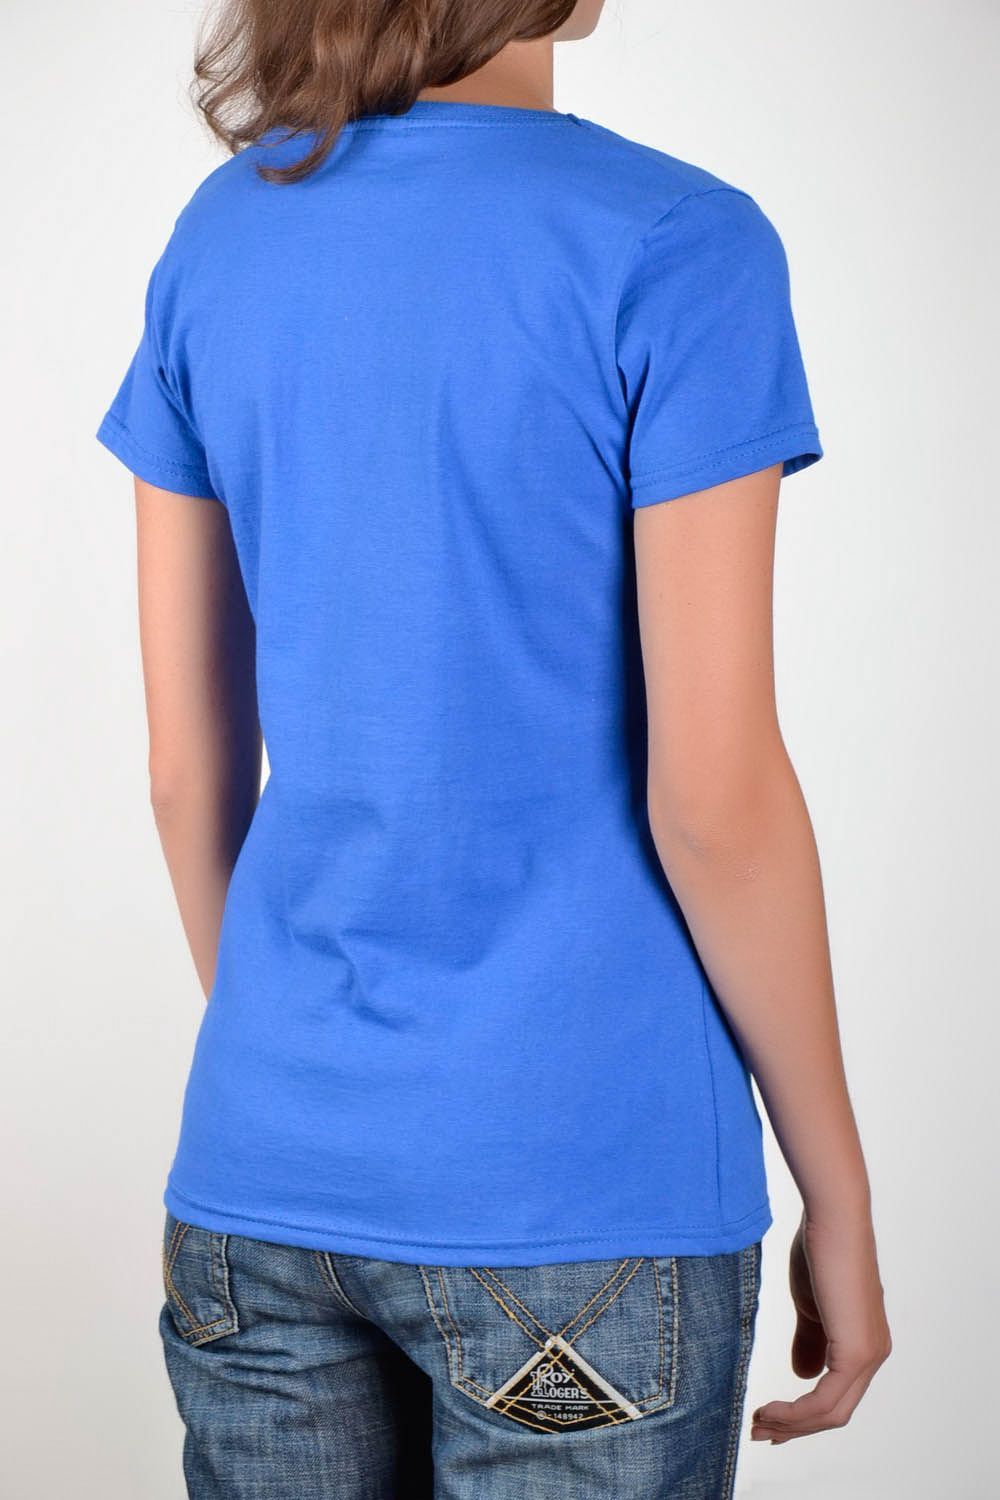 Blaues T-Shirt Katze foto 2